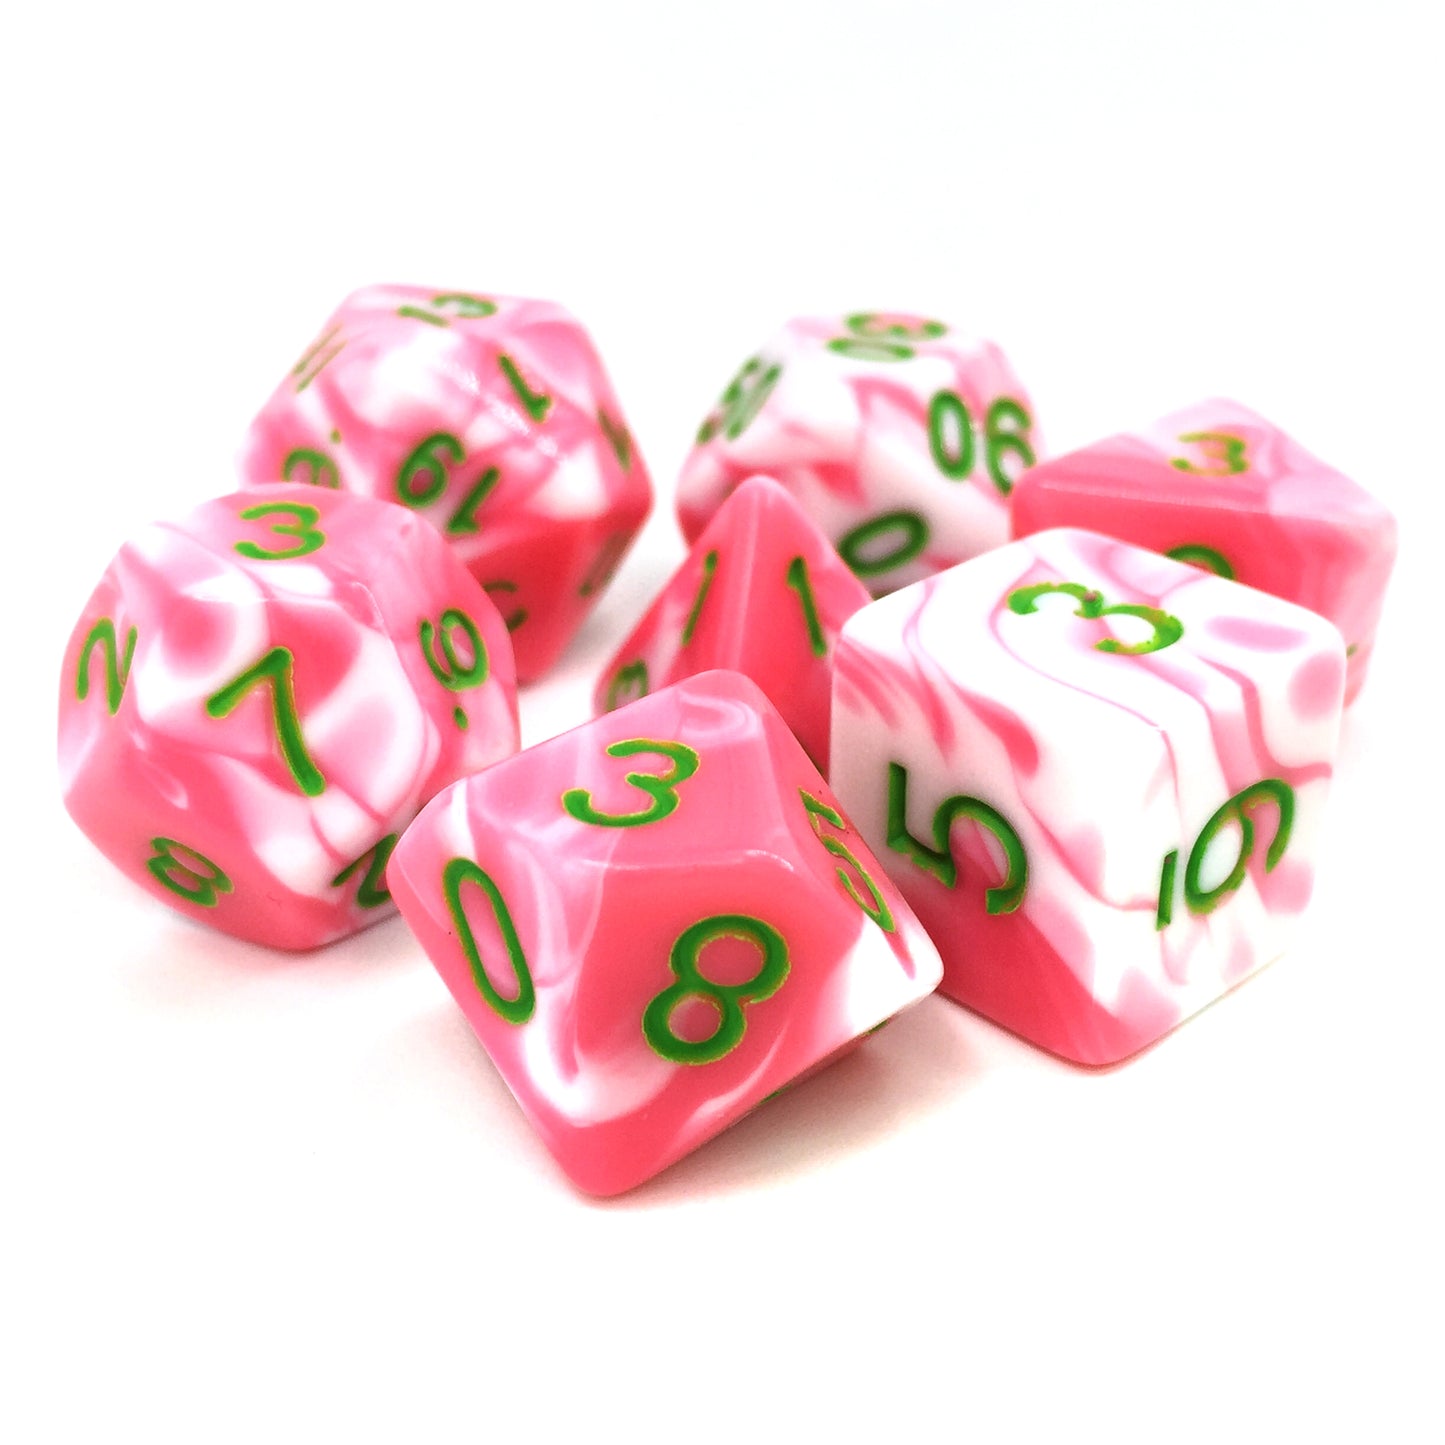 D20 Polyhedral 7 Piece Dice Set - Elemental - Pink/White